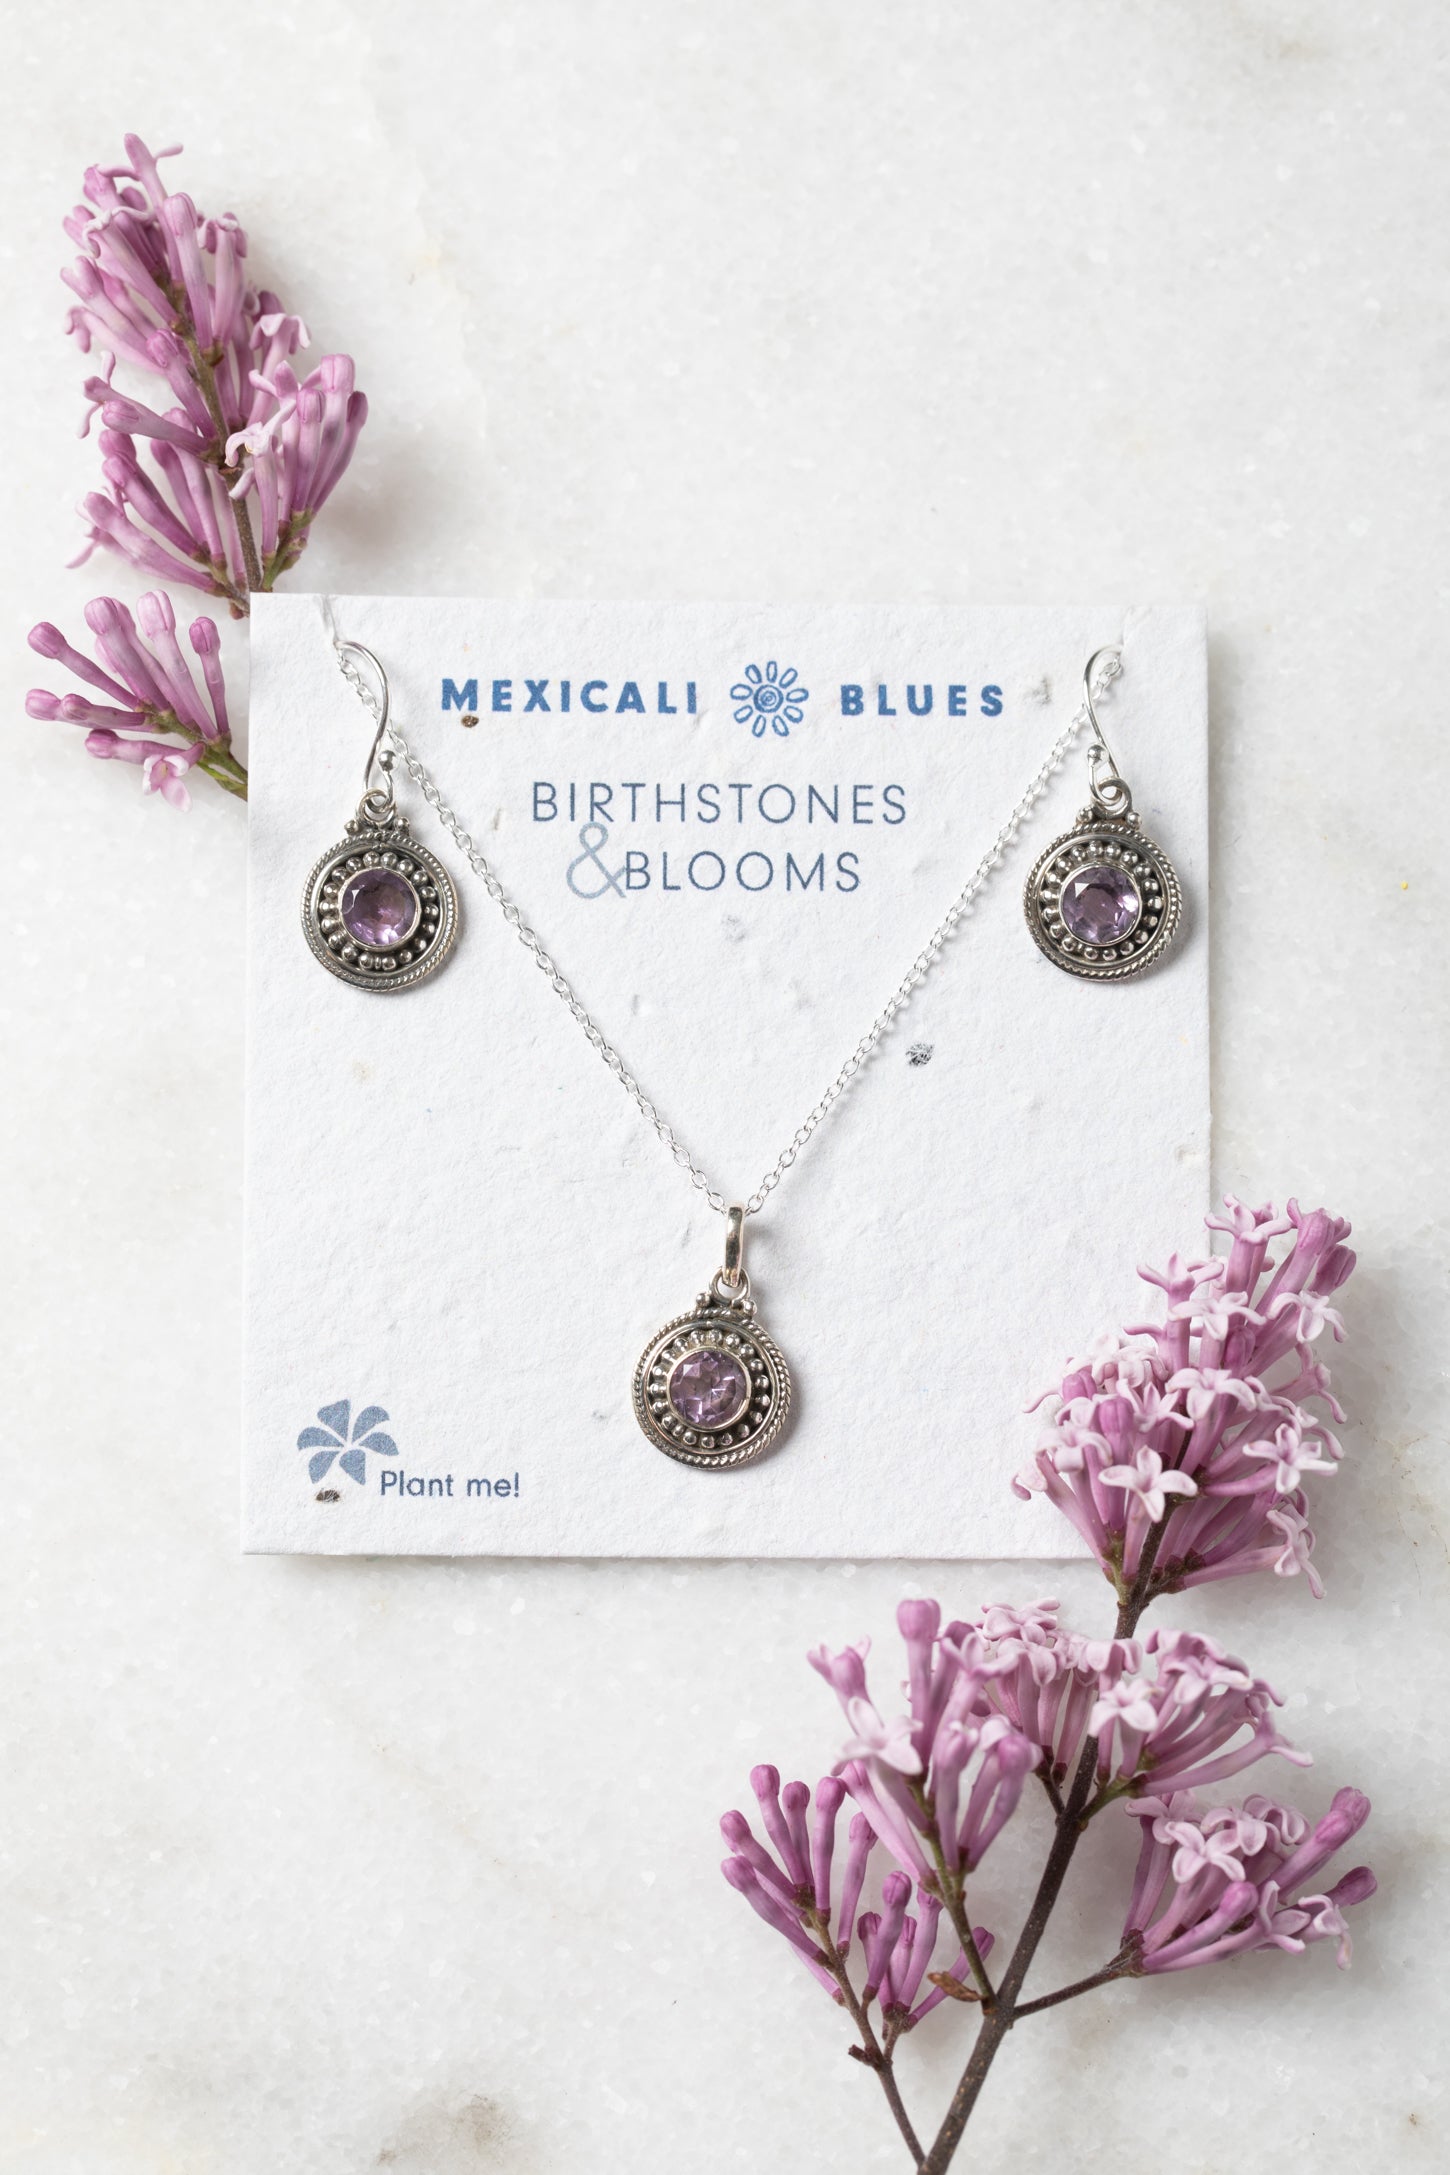 Birthstones & Blooms Gemstone Gift Set